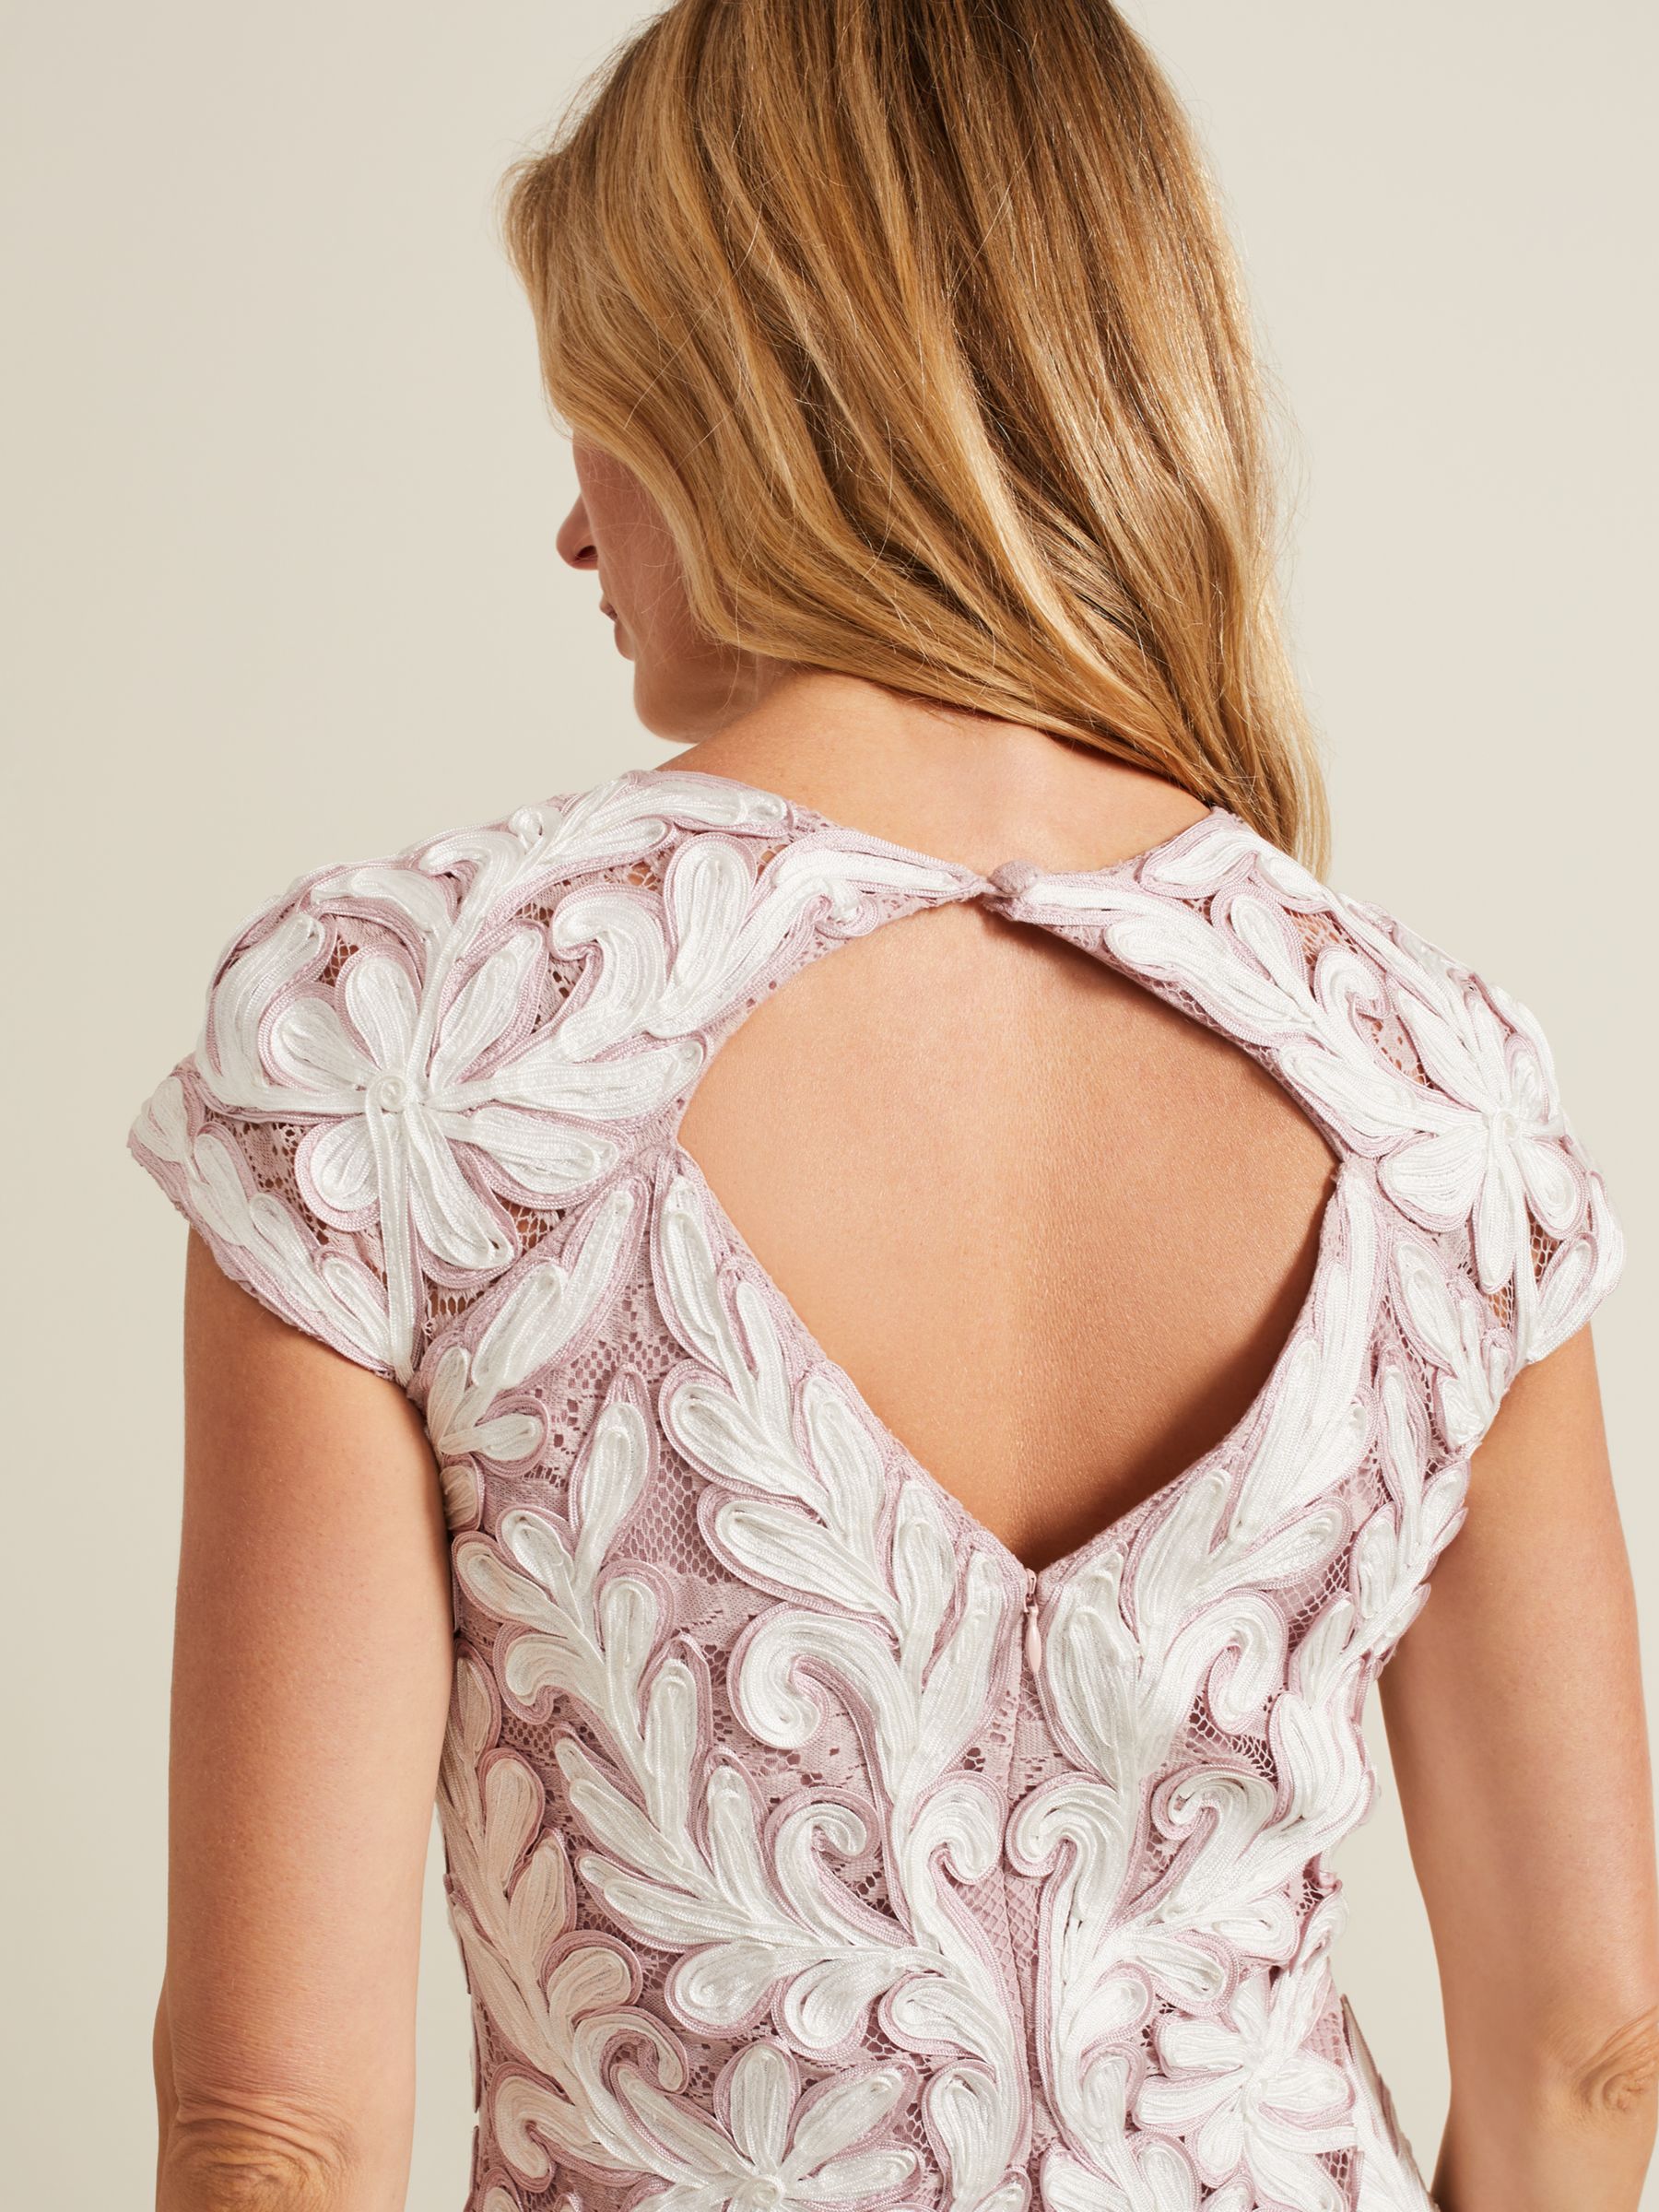 Buy Phase Eight Karima Tapework Knee Length Dress, Pale Pink Online at johnlewis.com